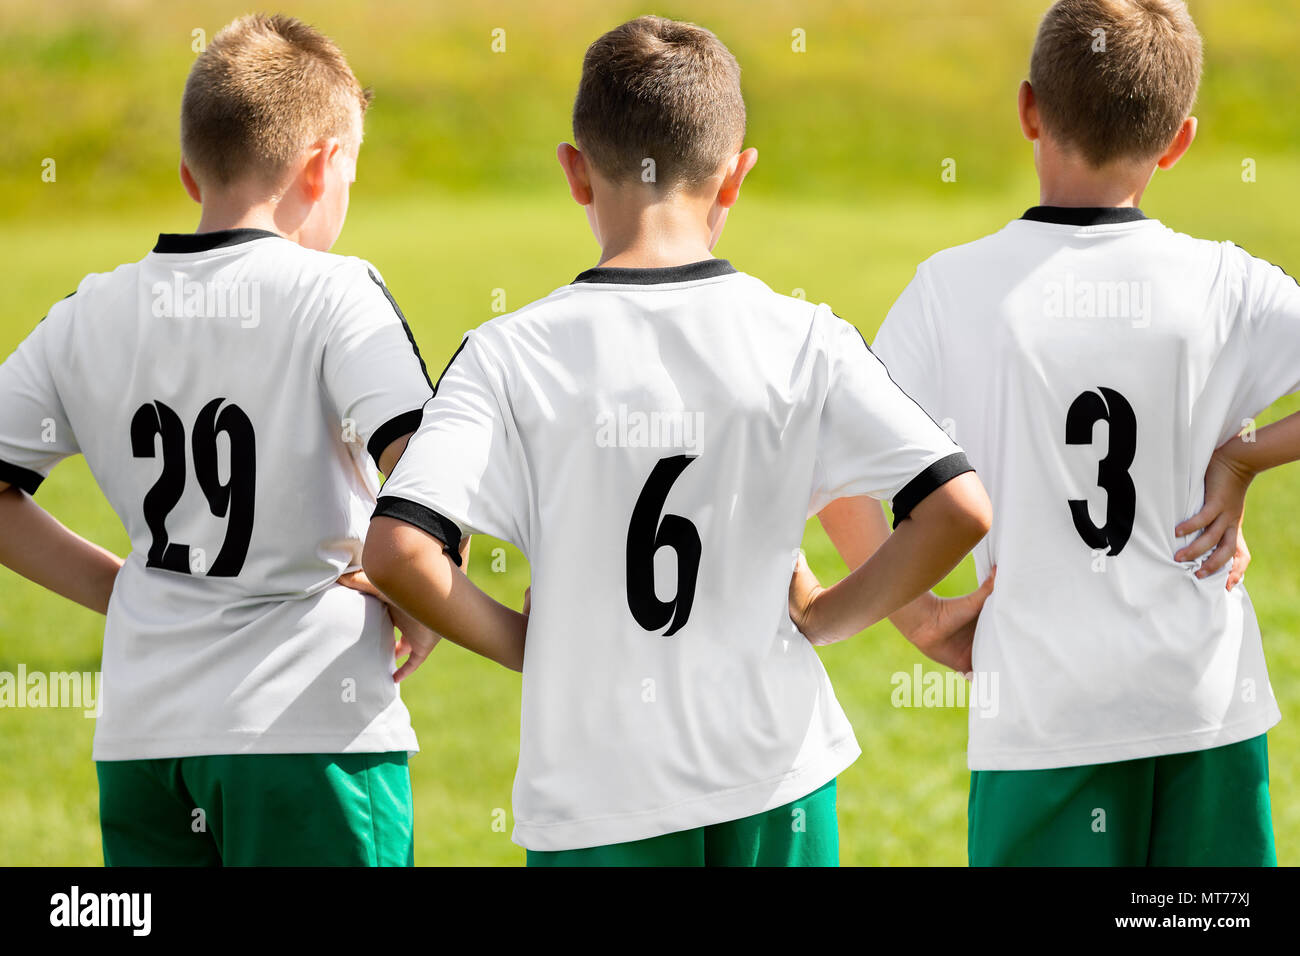 soccer jersey for boys